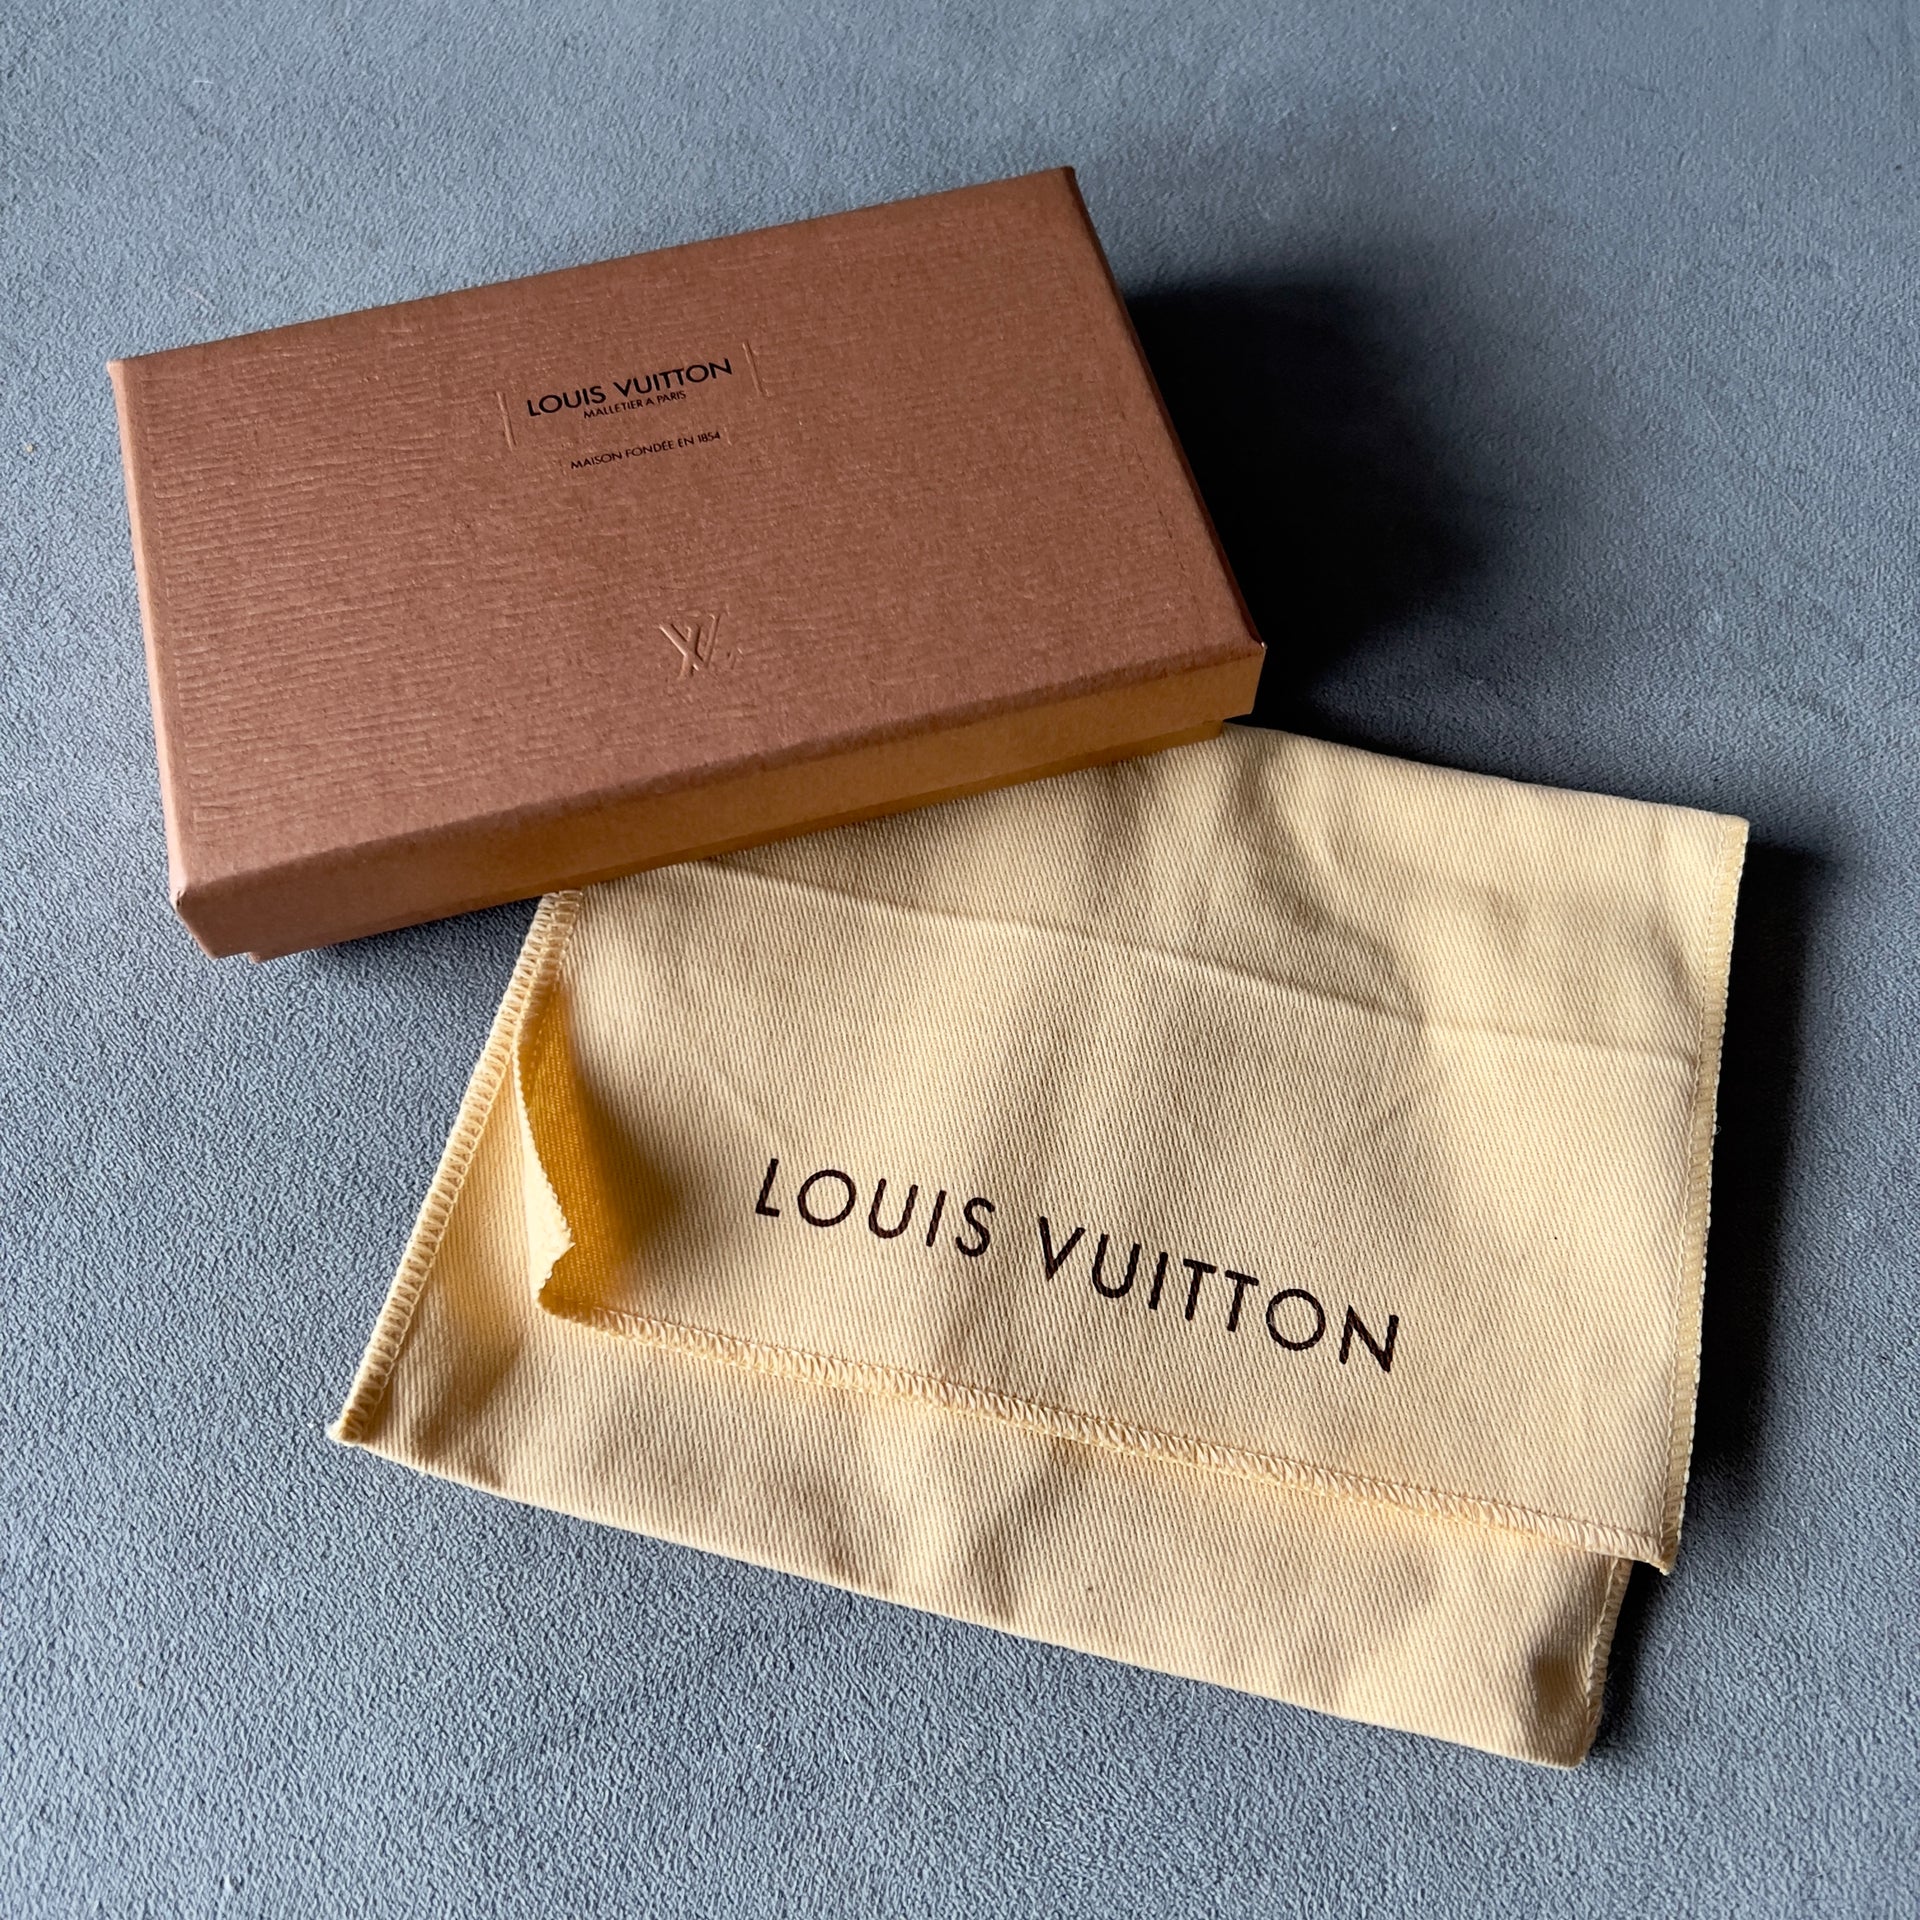 Louis Vuitton Goods Box 5 80x3 60x1 10